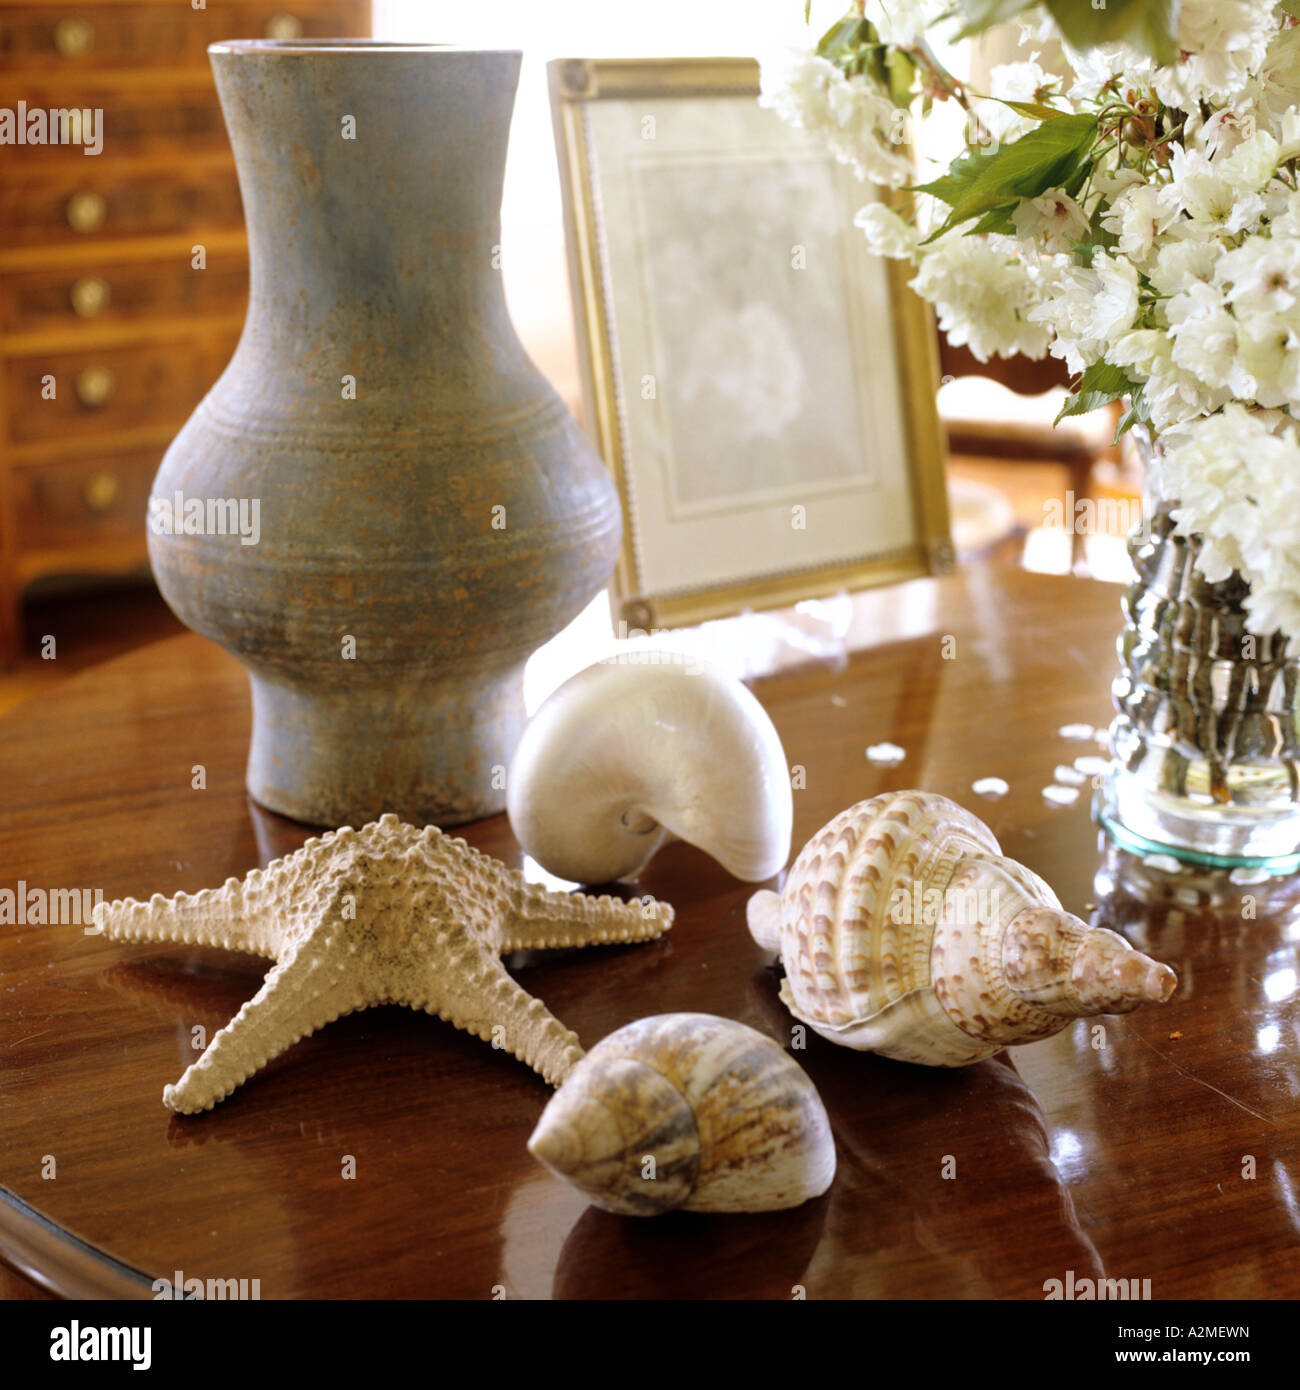 Seashells and vase on wooden table Stock Photo